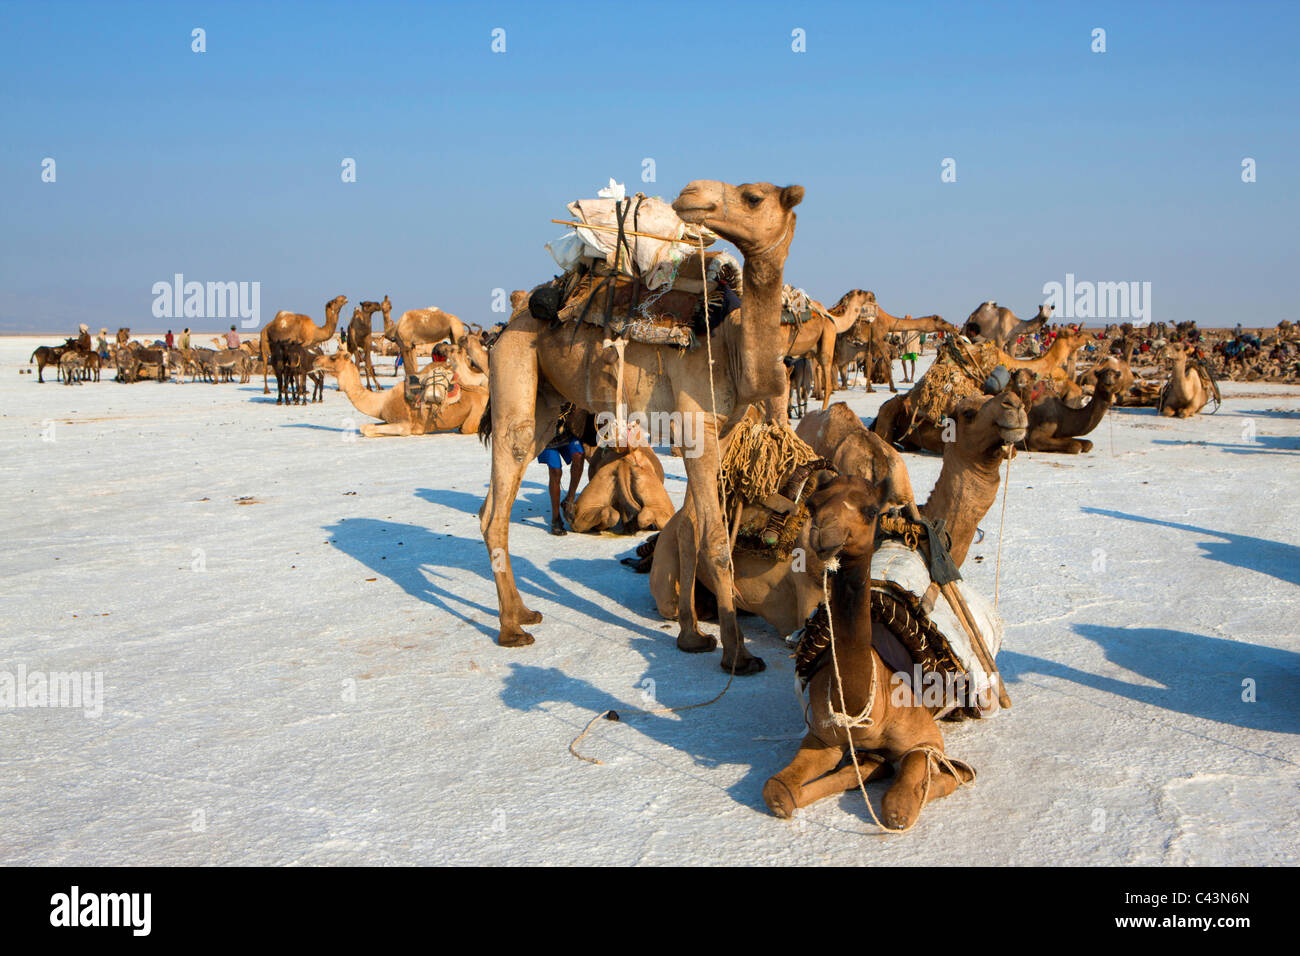 Ahmed Ela, Africa, Ethiopia, Afar region, Afgar, Danakil, desert, salt lake, salt, camels, dromedaries, resting place Stock Photo